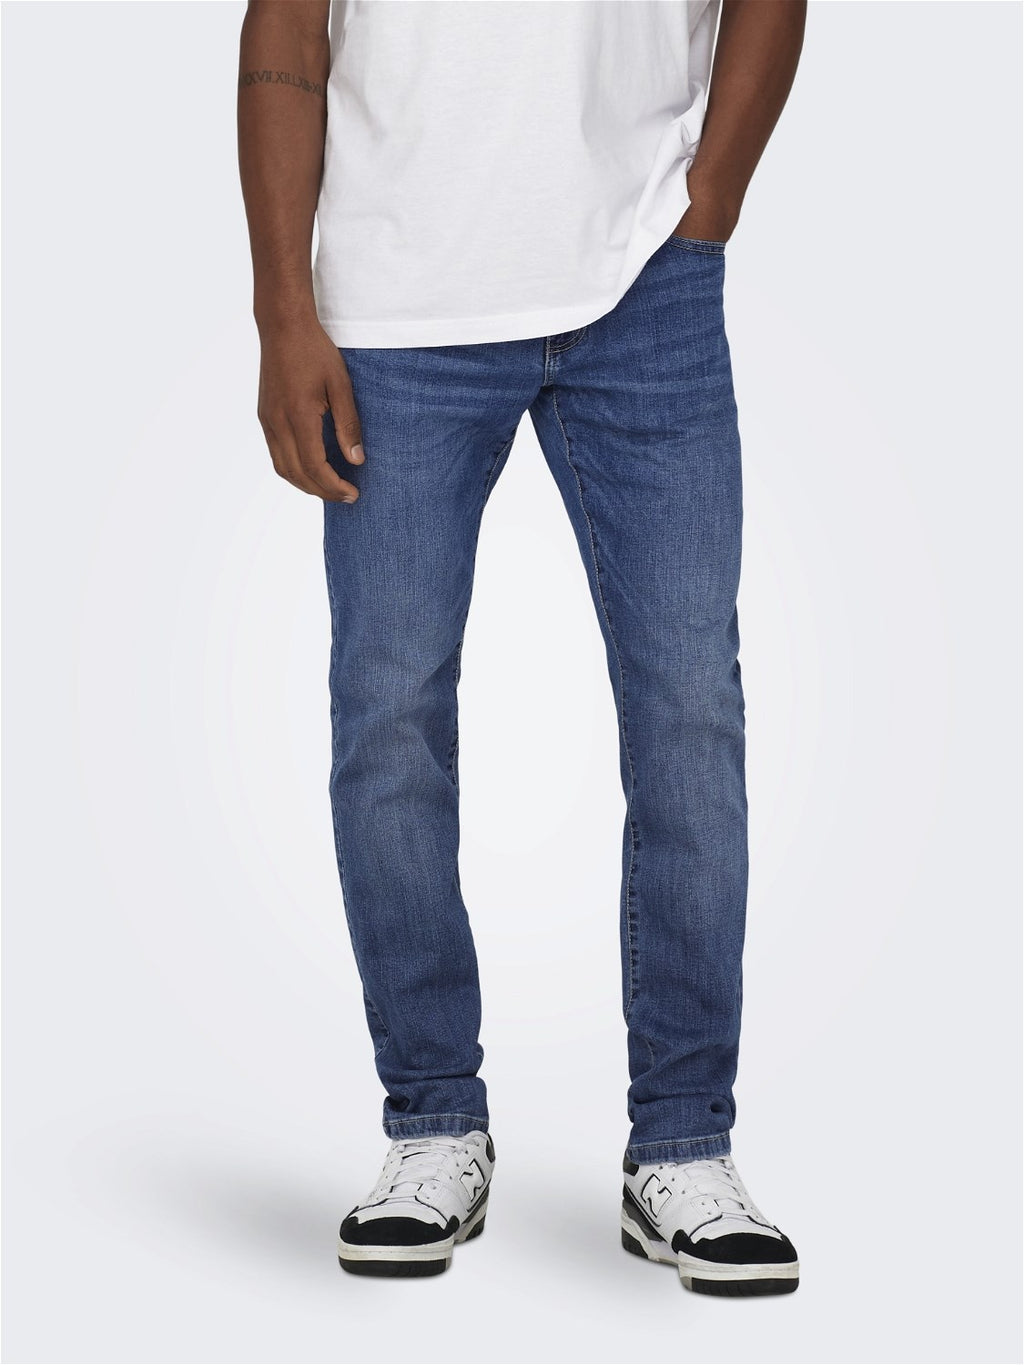 WEFT Flex Jeans Regular 6755 - Medium Blue Denim